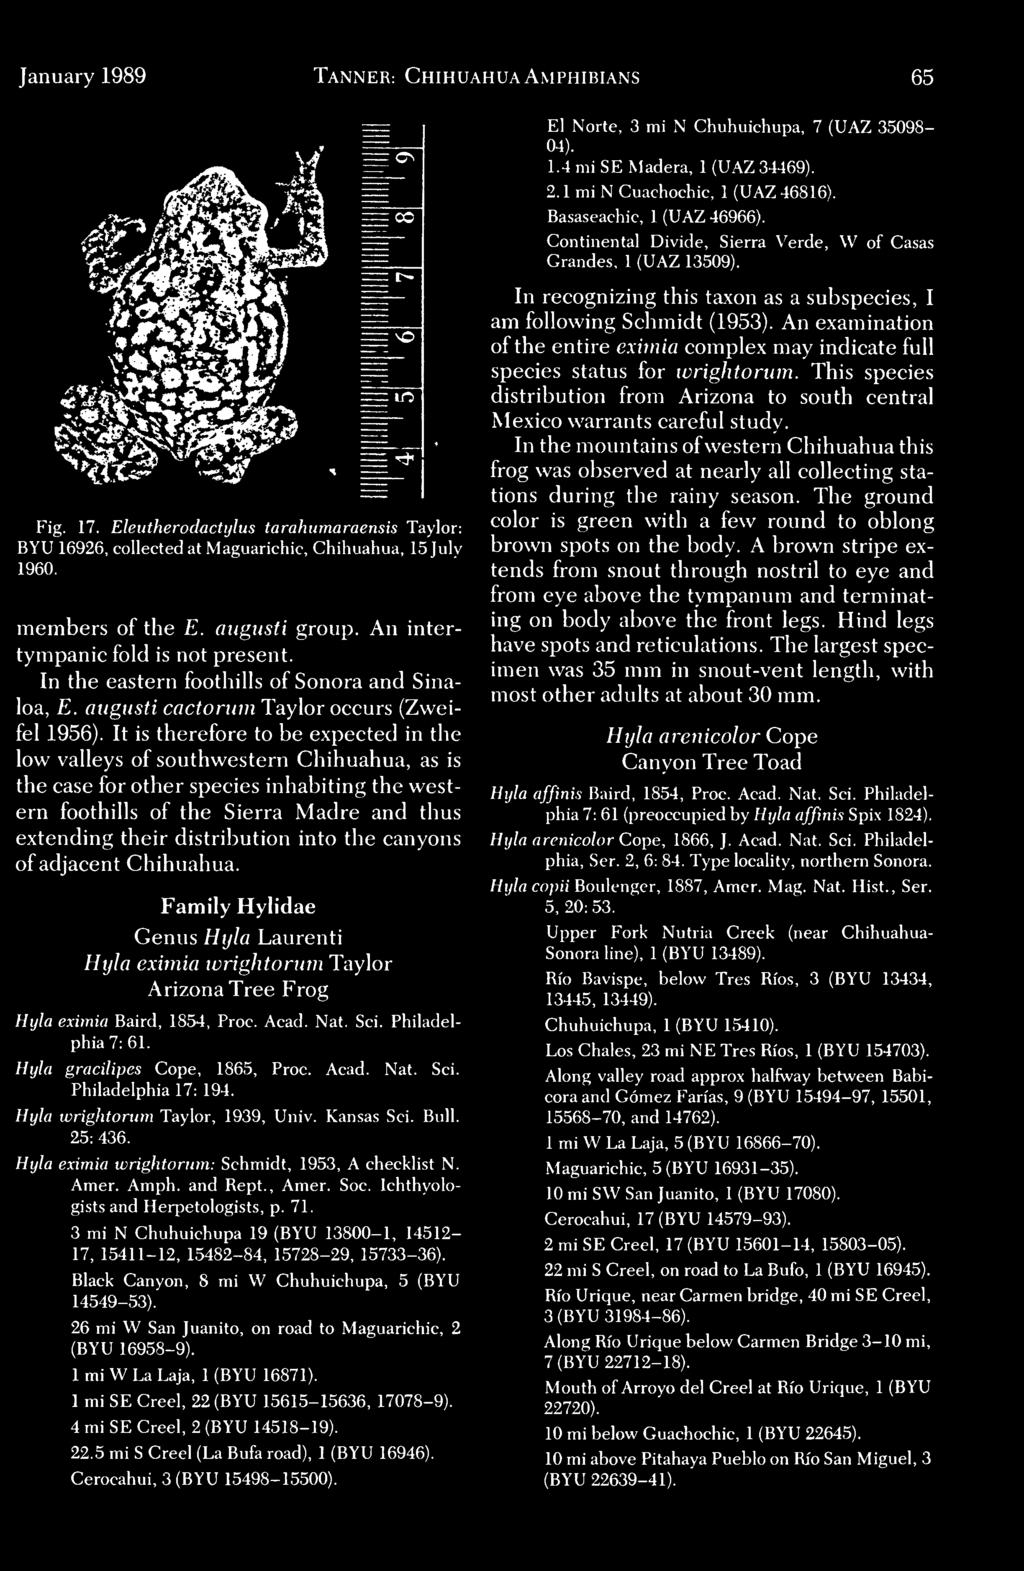 distribution into the canyons of adjacent Chihuahua. Family Hylidae Genus Hula Laurenti Hula eximia wrightorum Taylor Arizona Tree Frog Hijla eximia Baird, 1854, Proc. Acad. Nat. Sci.